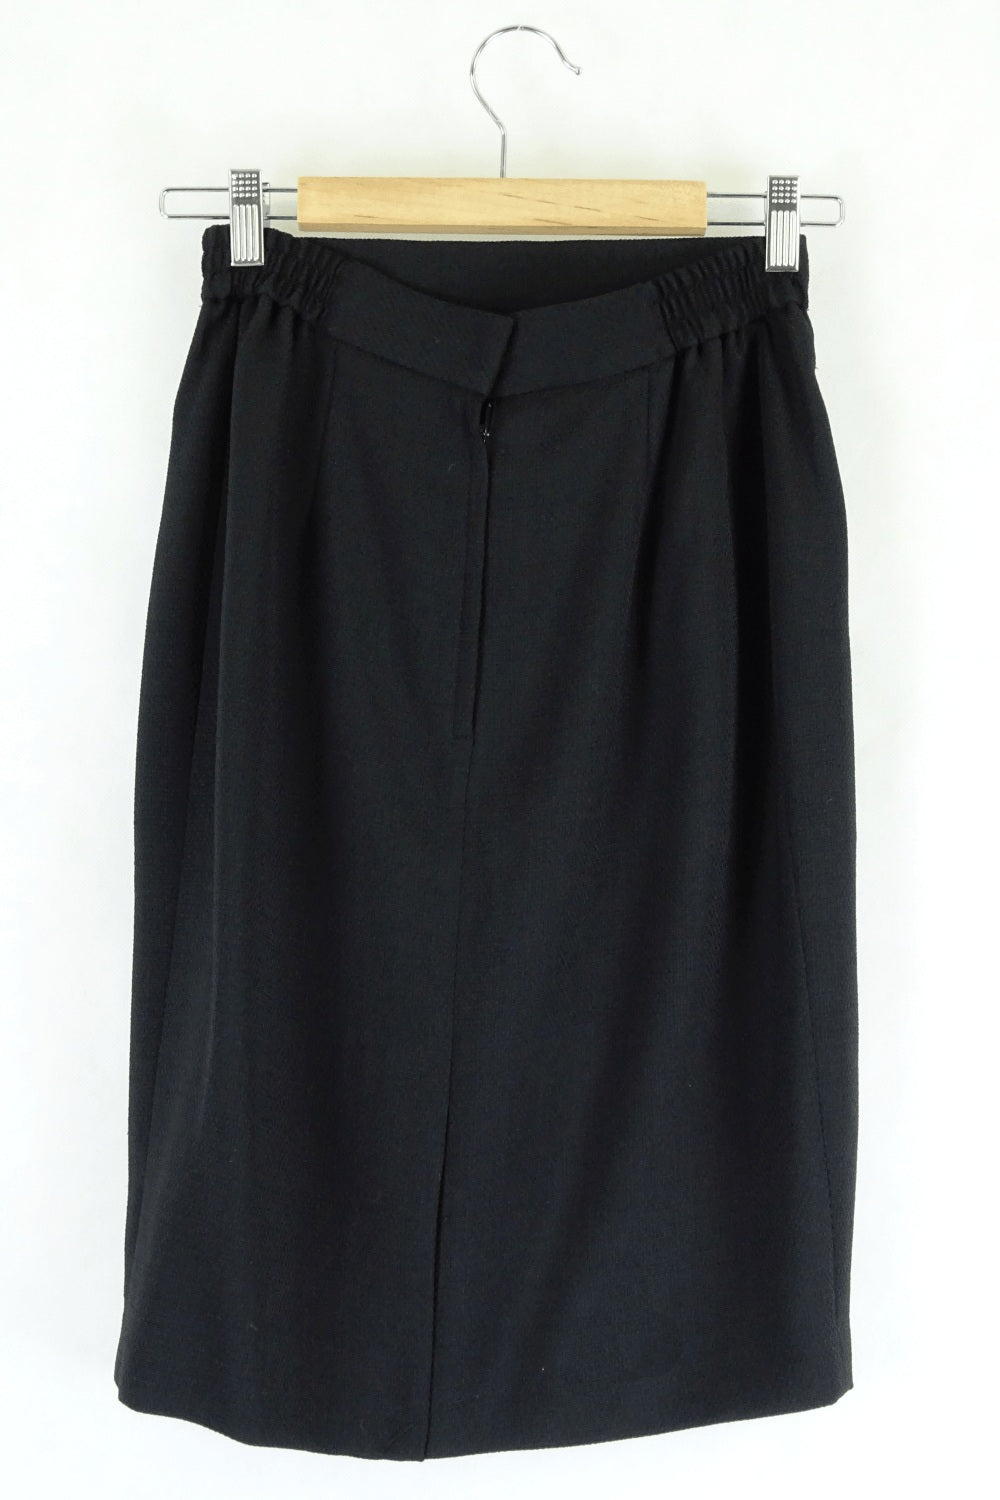 Braville Femme Black Skirt 38 (AU10)